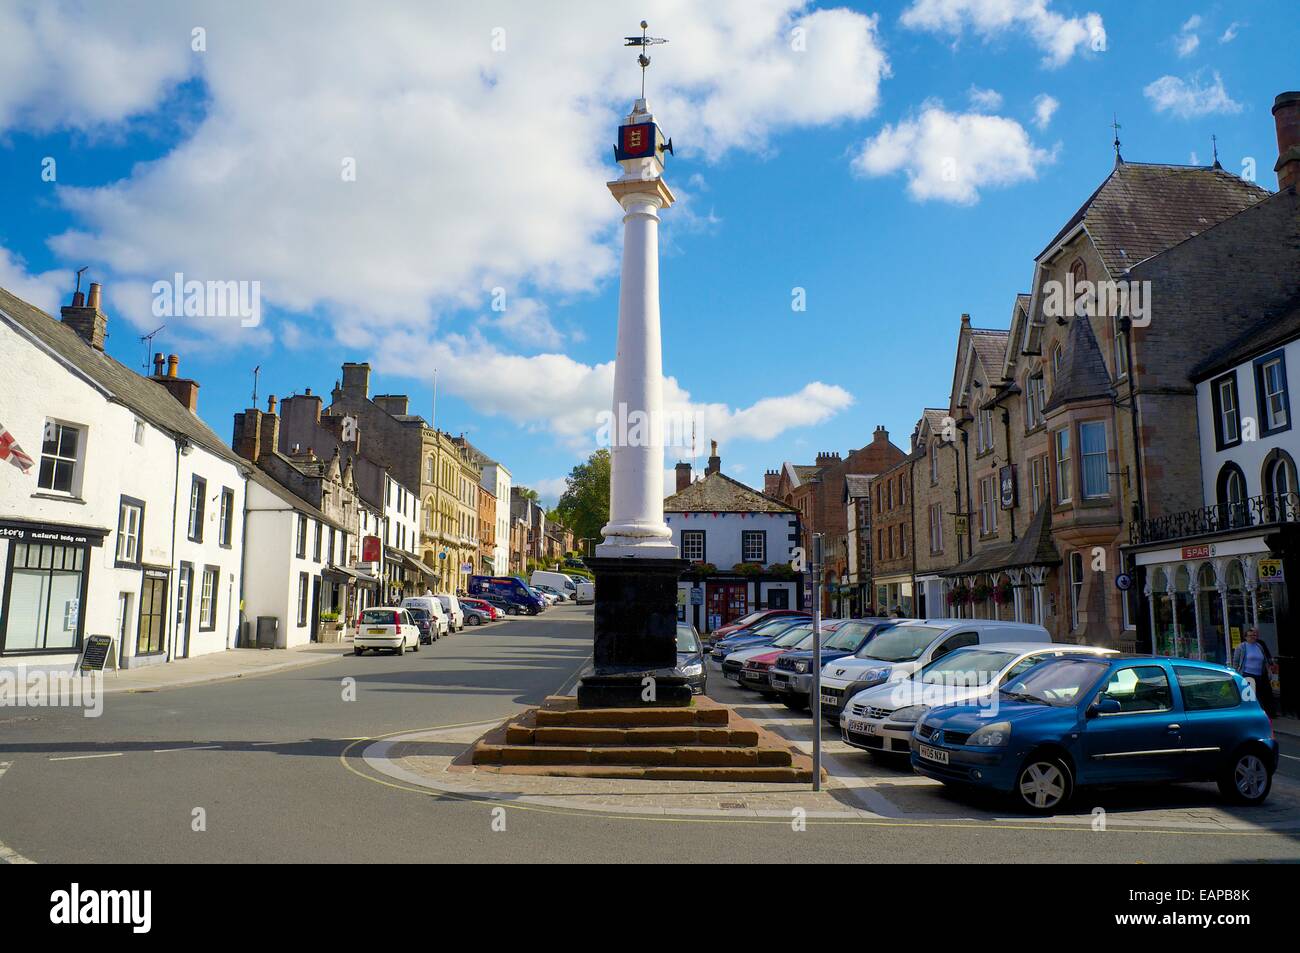 The High Cross Boroughgate. Appleby-in-Westmorland, Cumbria, England, United Kingdom. Stock Photo